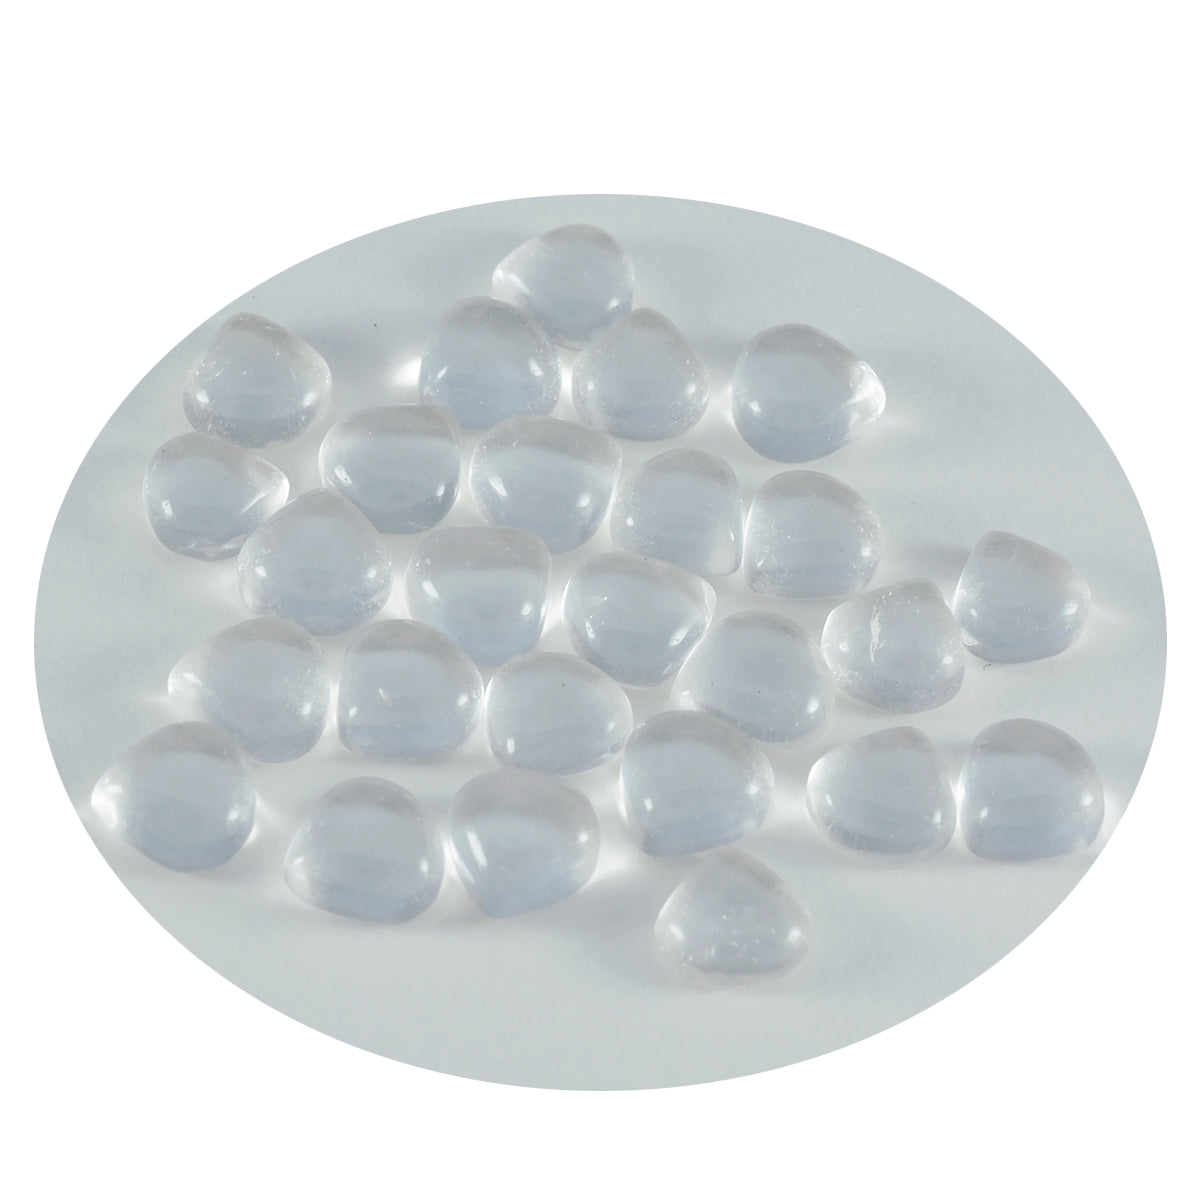 Riyogems 1PC White Crystal Quartz Cabochon 4x4 mm Heart Shape sweet Quality Gems